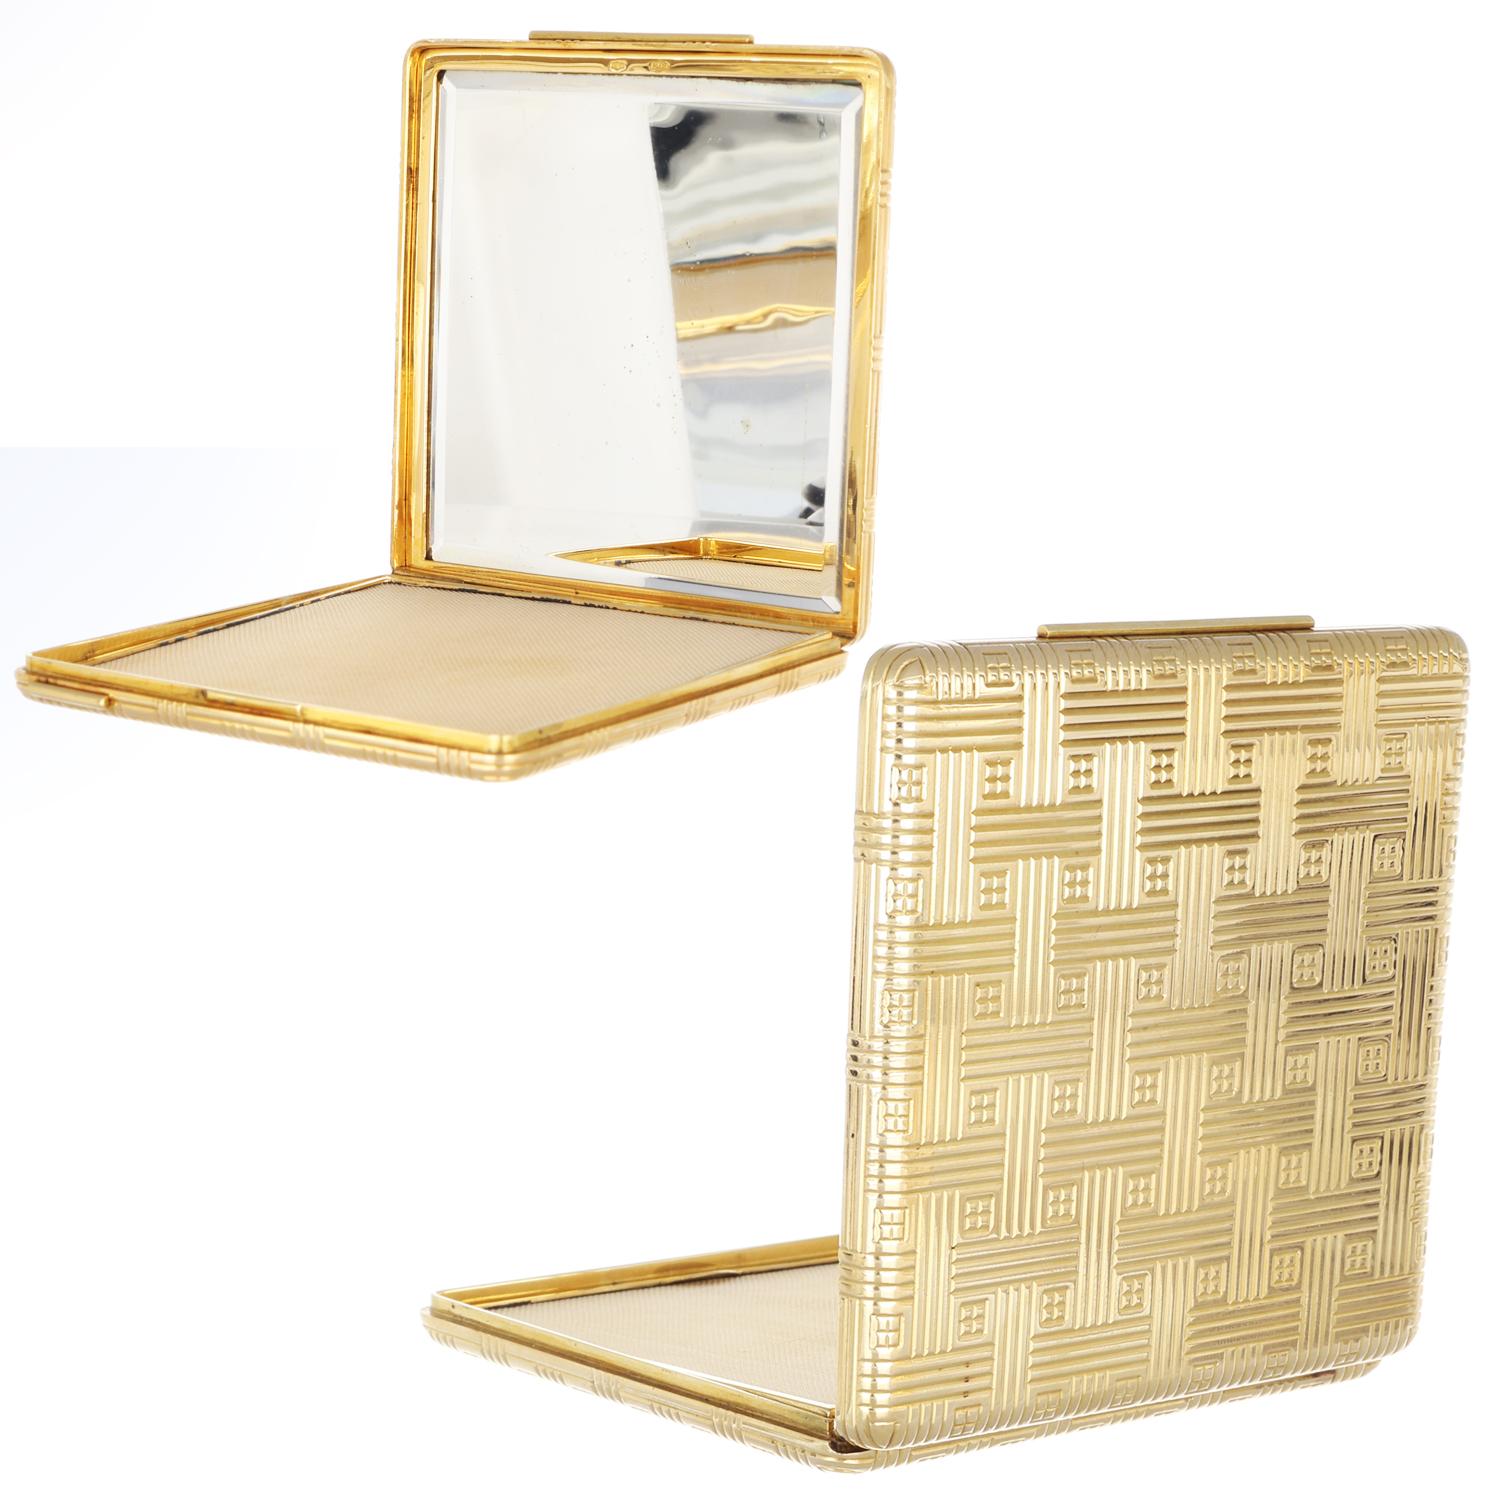 18Kt Gold Seltene kompakte Puderdose - Made in Italy 1970 circa - Geometrisches Muster im Angebot 7